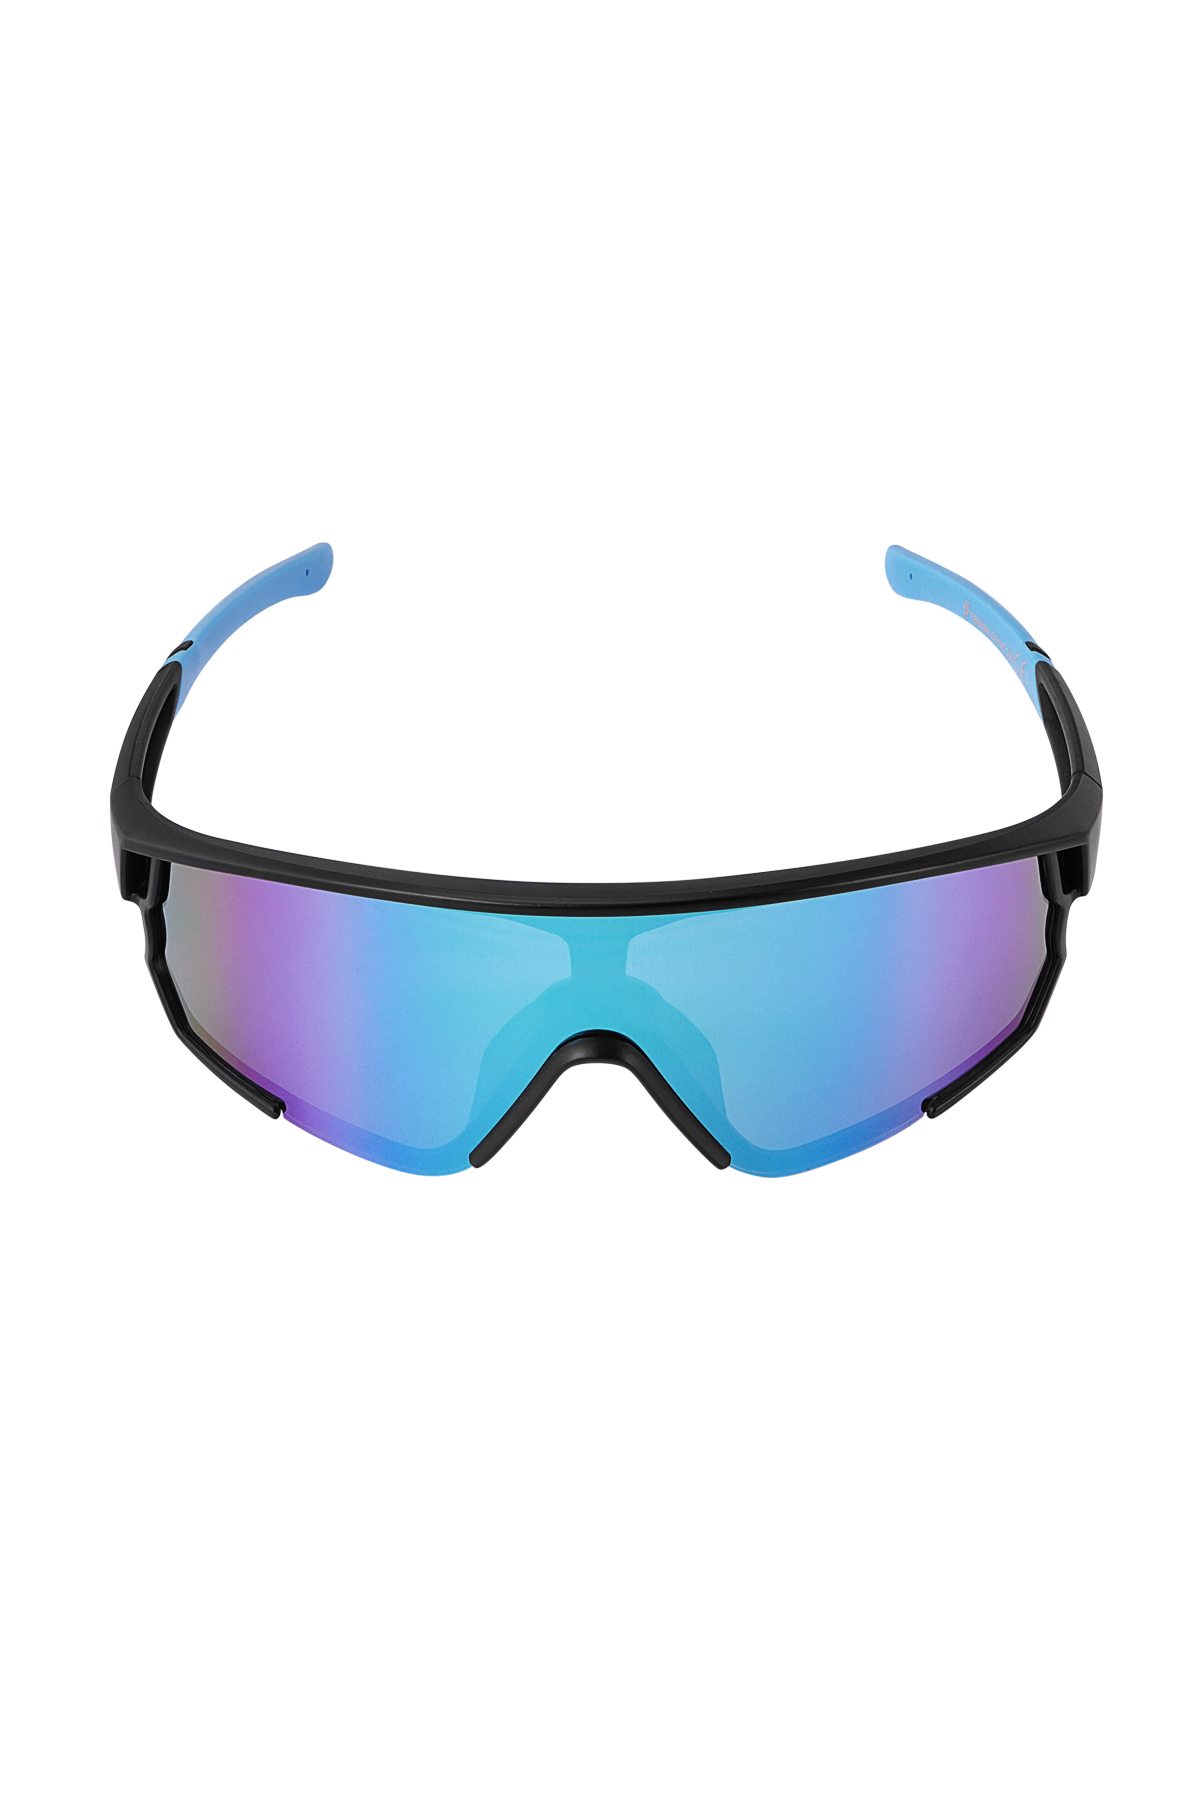 Sunglasses colored lenses - black/blue Picture6